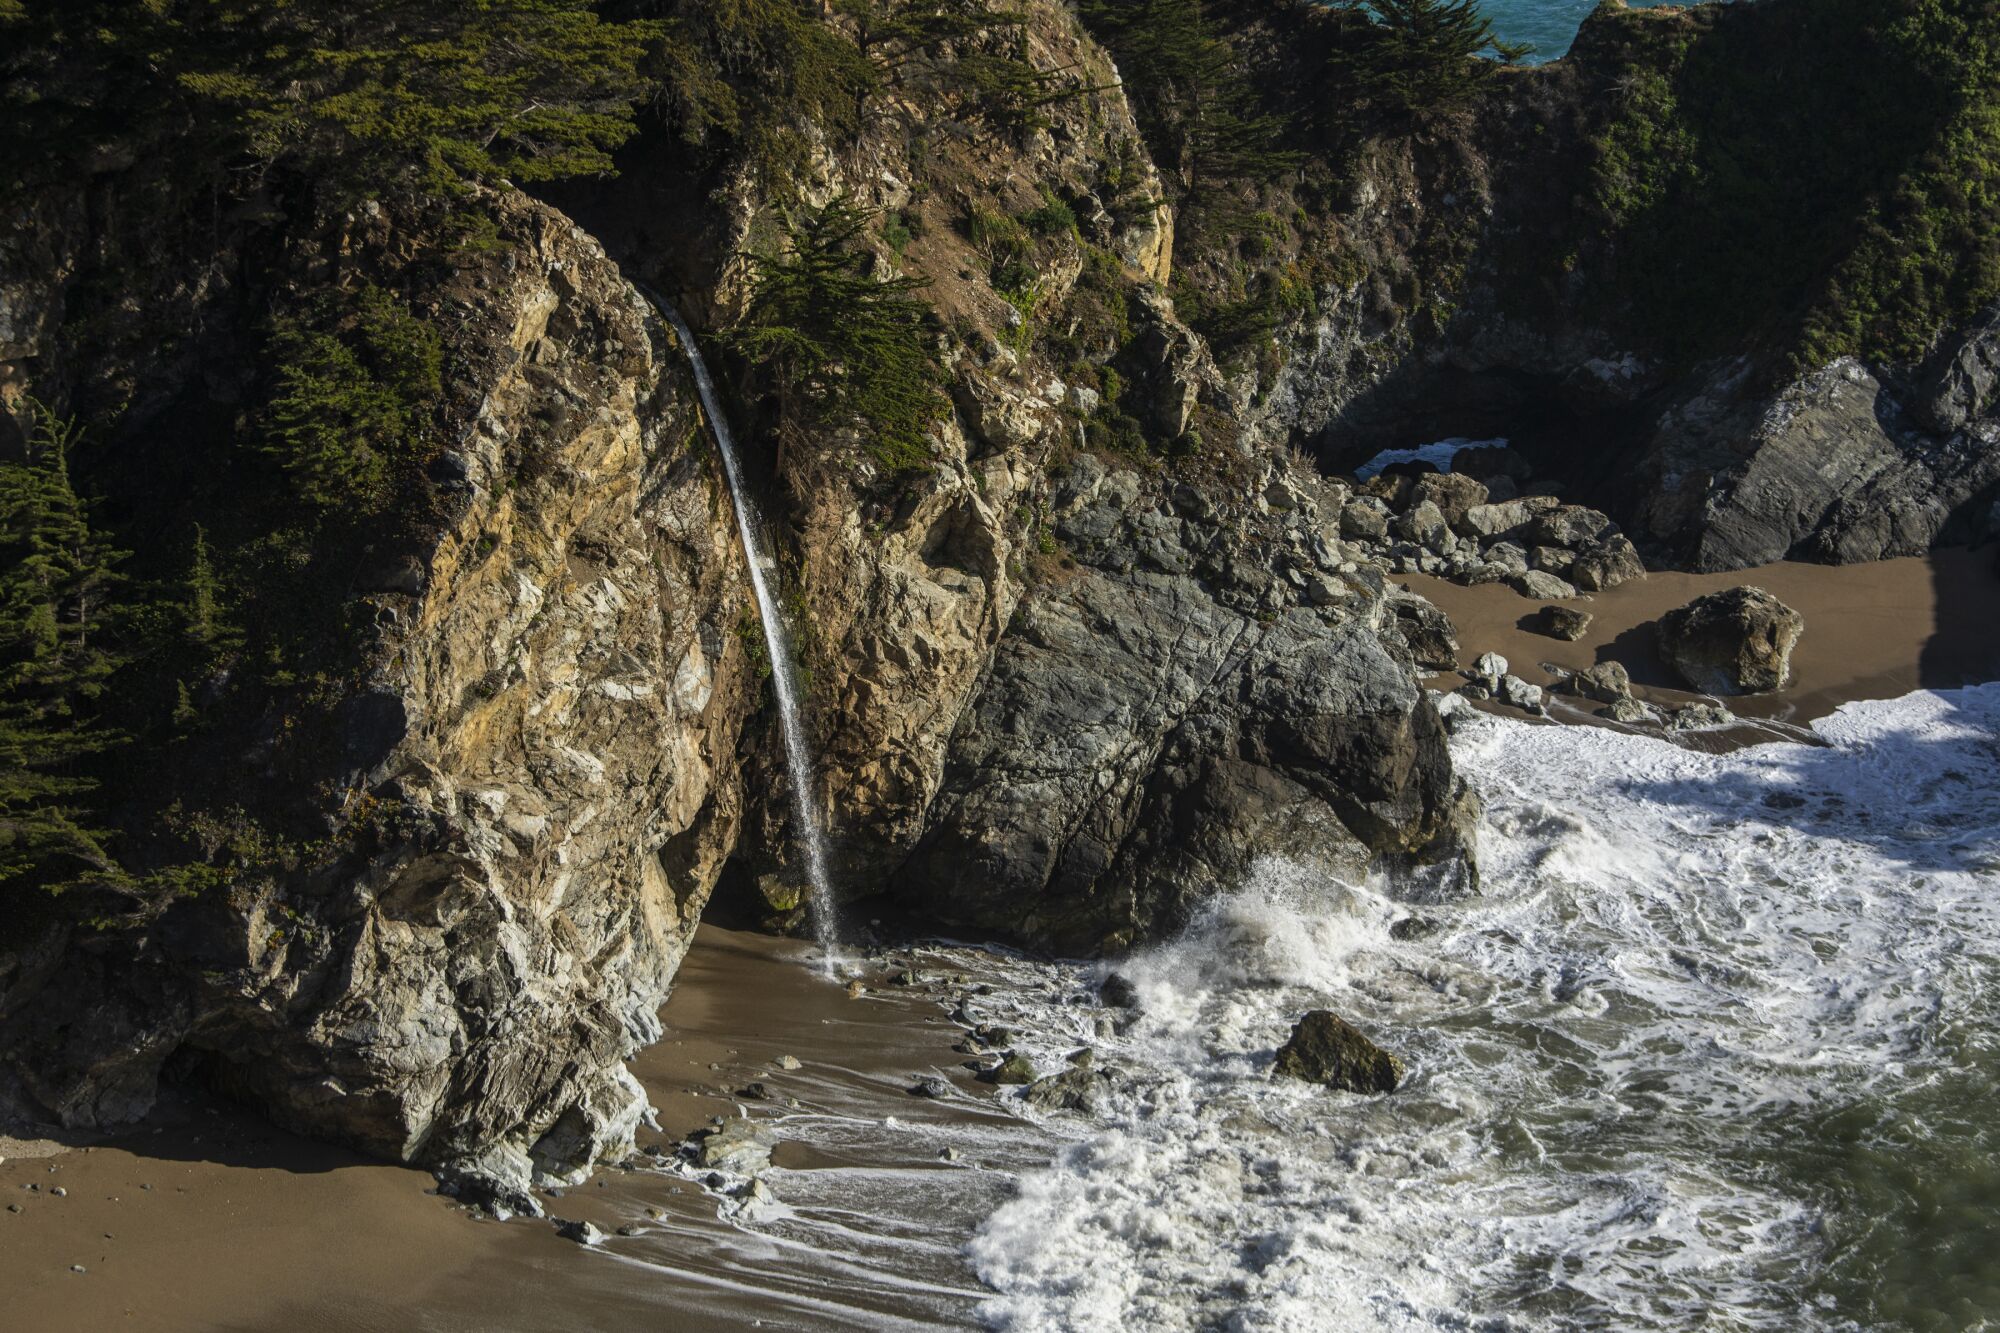 A cliffside waterfall emptying onto a beach.